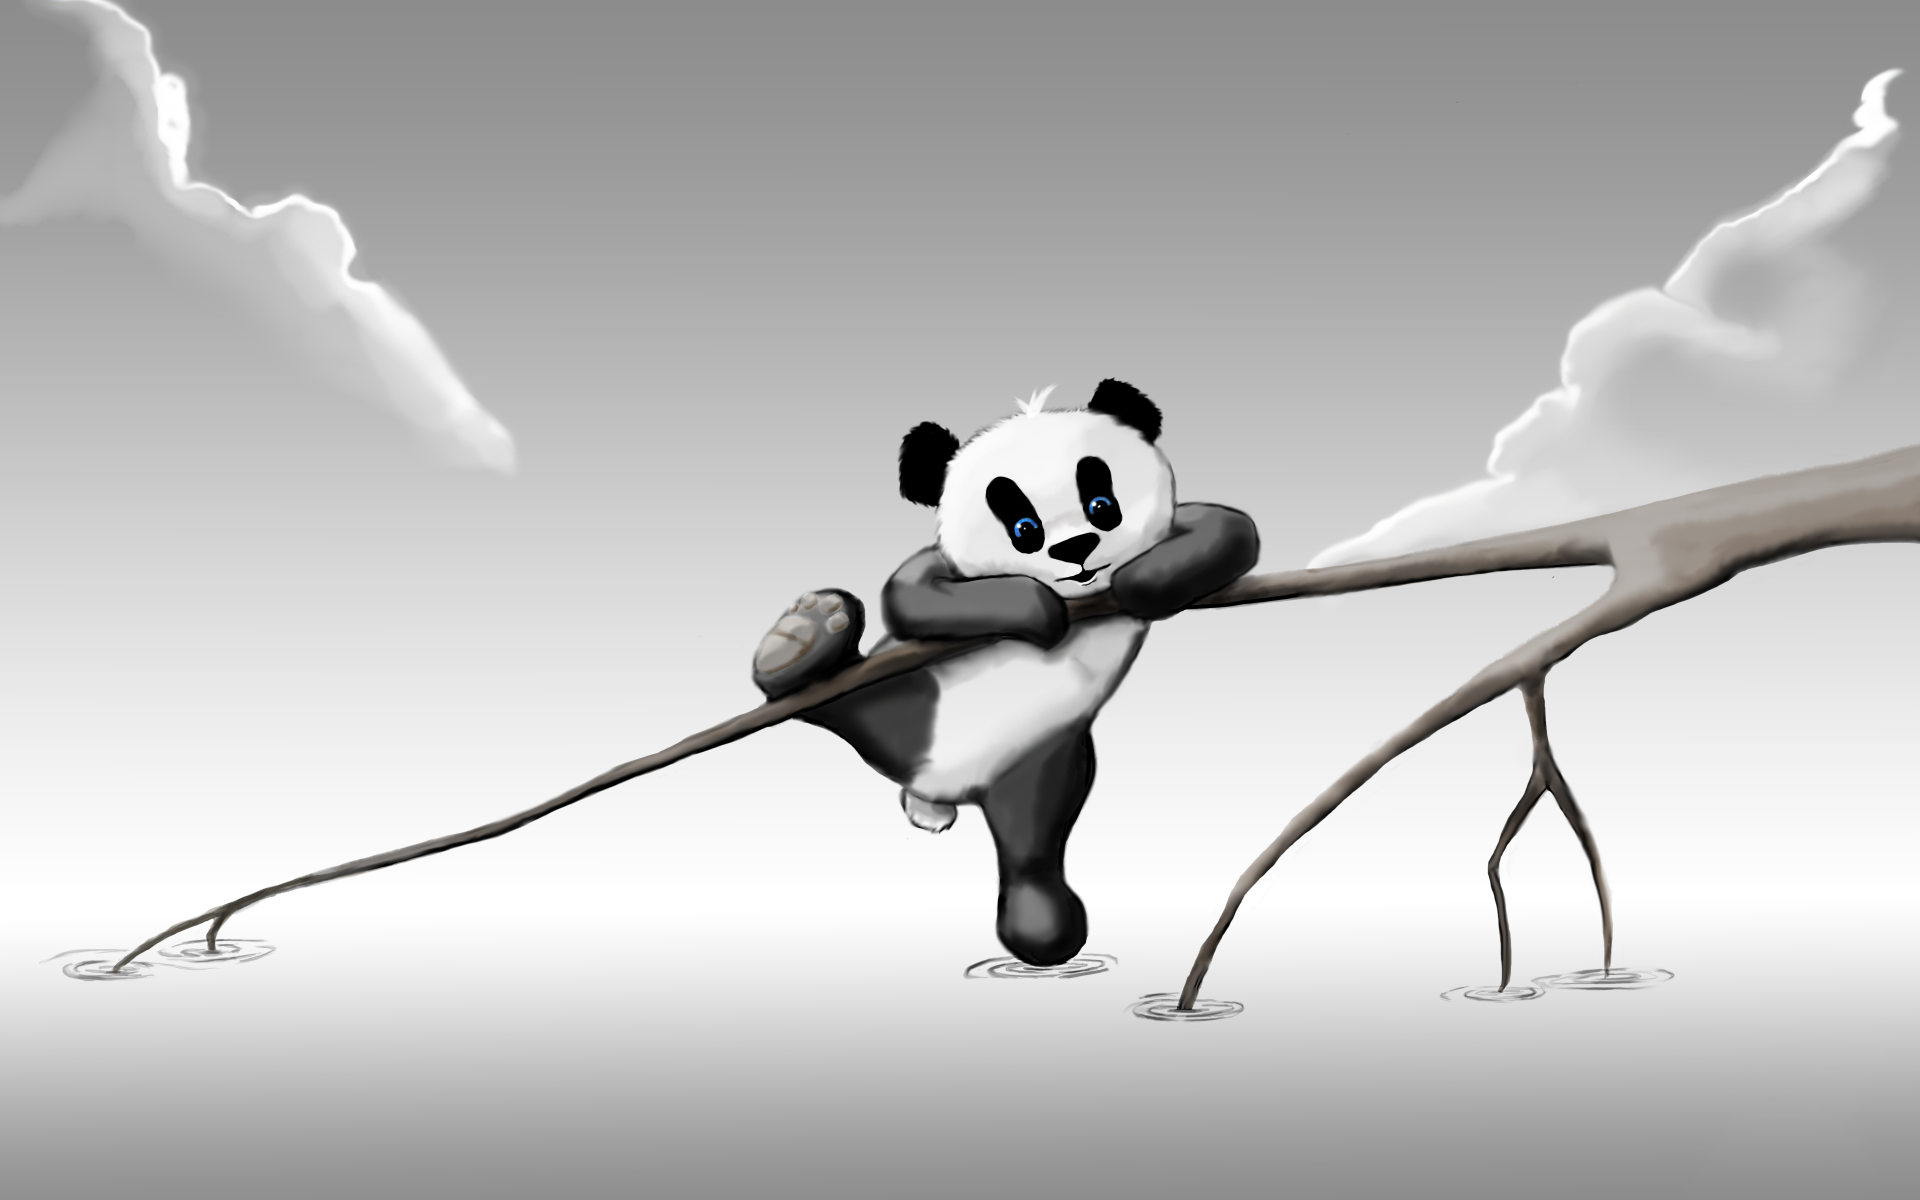 55 Panda Wallpaper Stock Video Footage  4K and HD Video Clips   Shutterstock